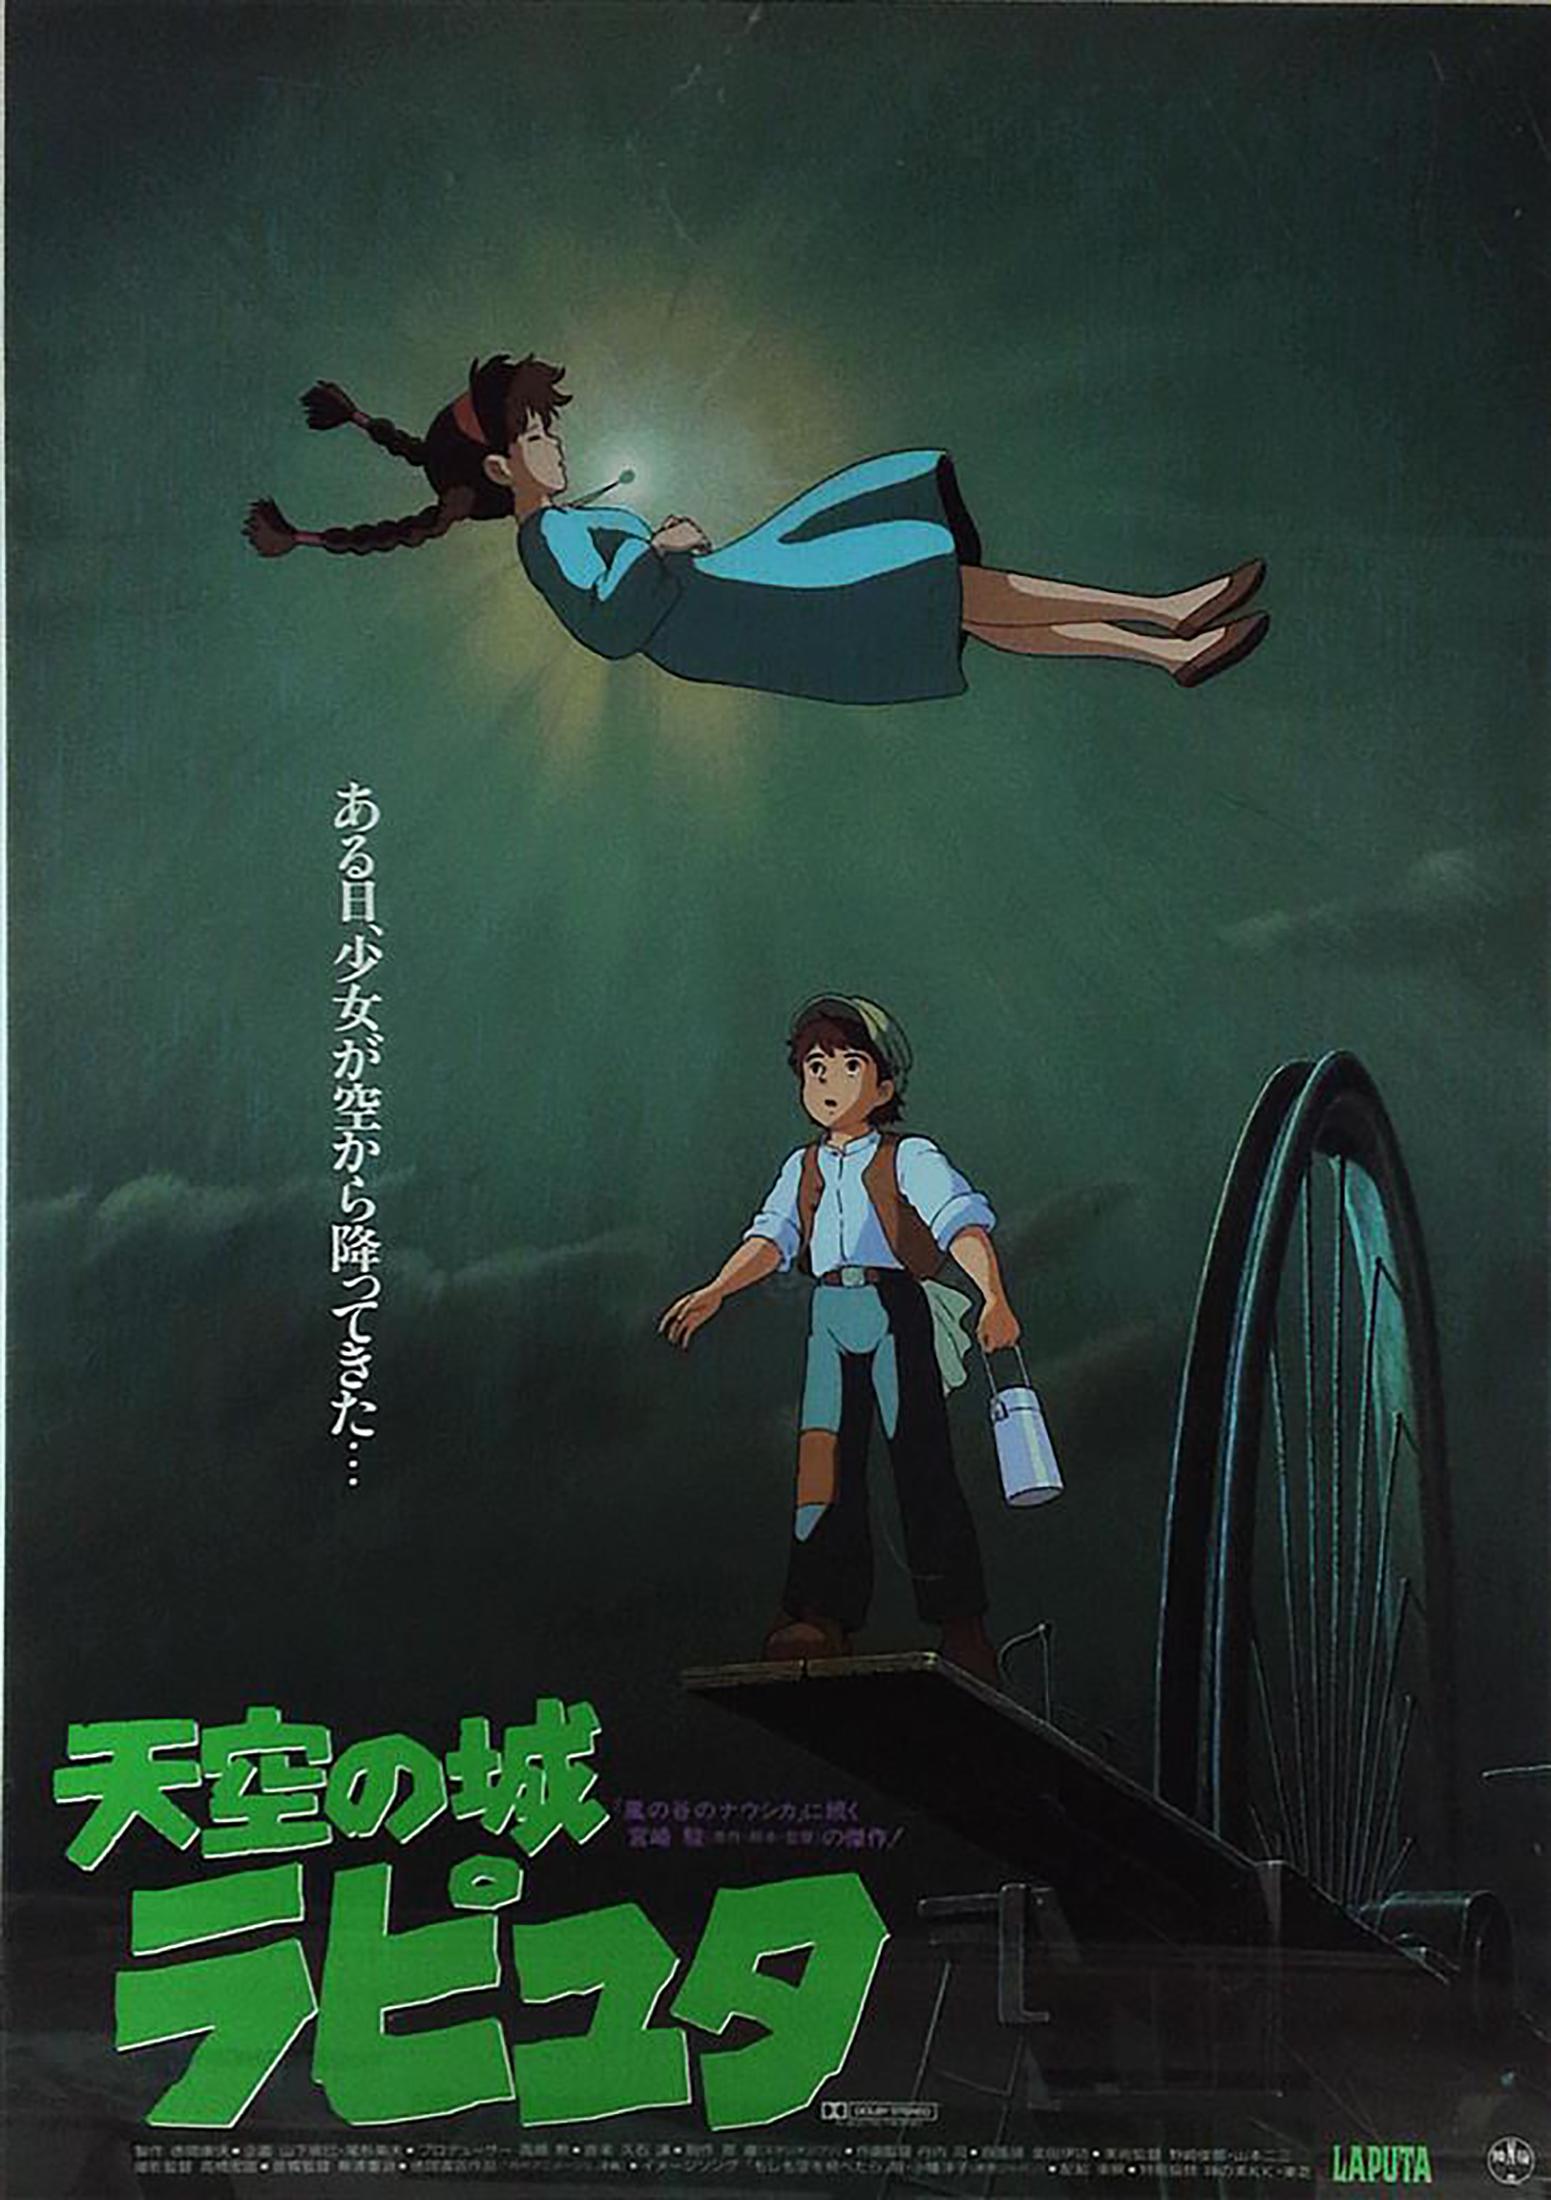 Laputa: Castle in the Sky Original Vintage Movie Poster, Studio Ghibli (1986) - Print by Unknown